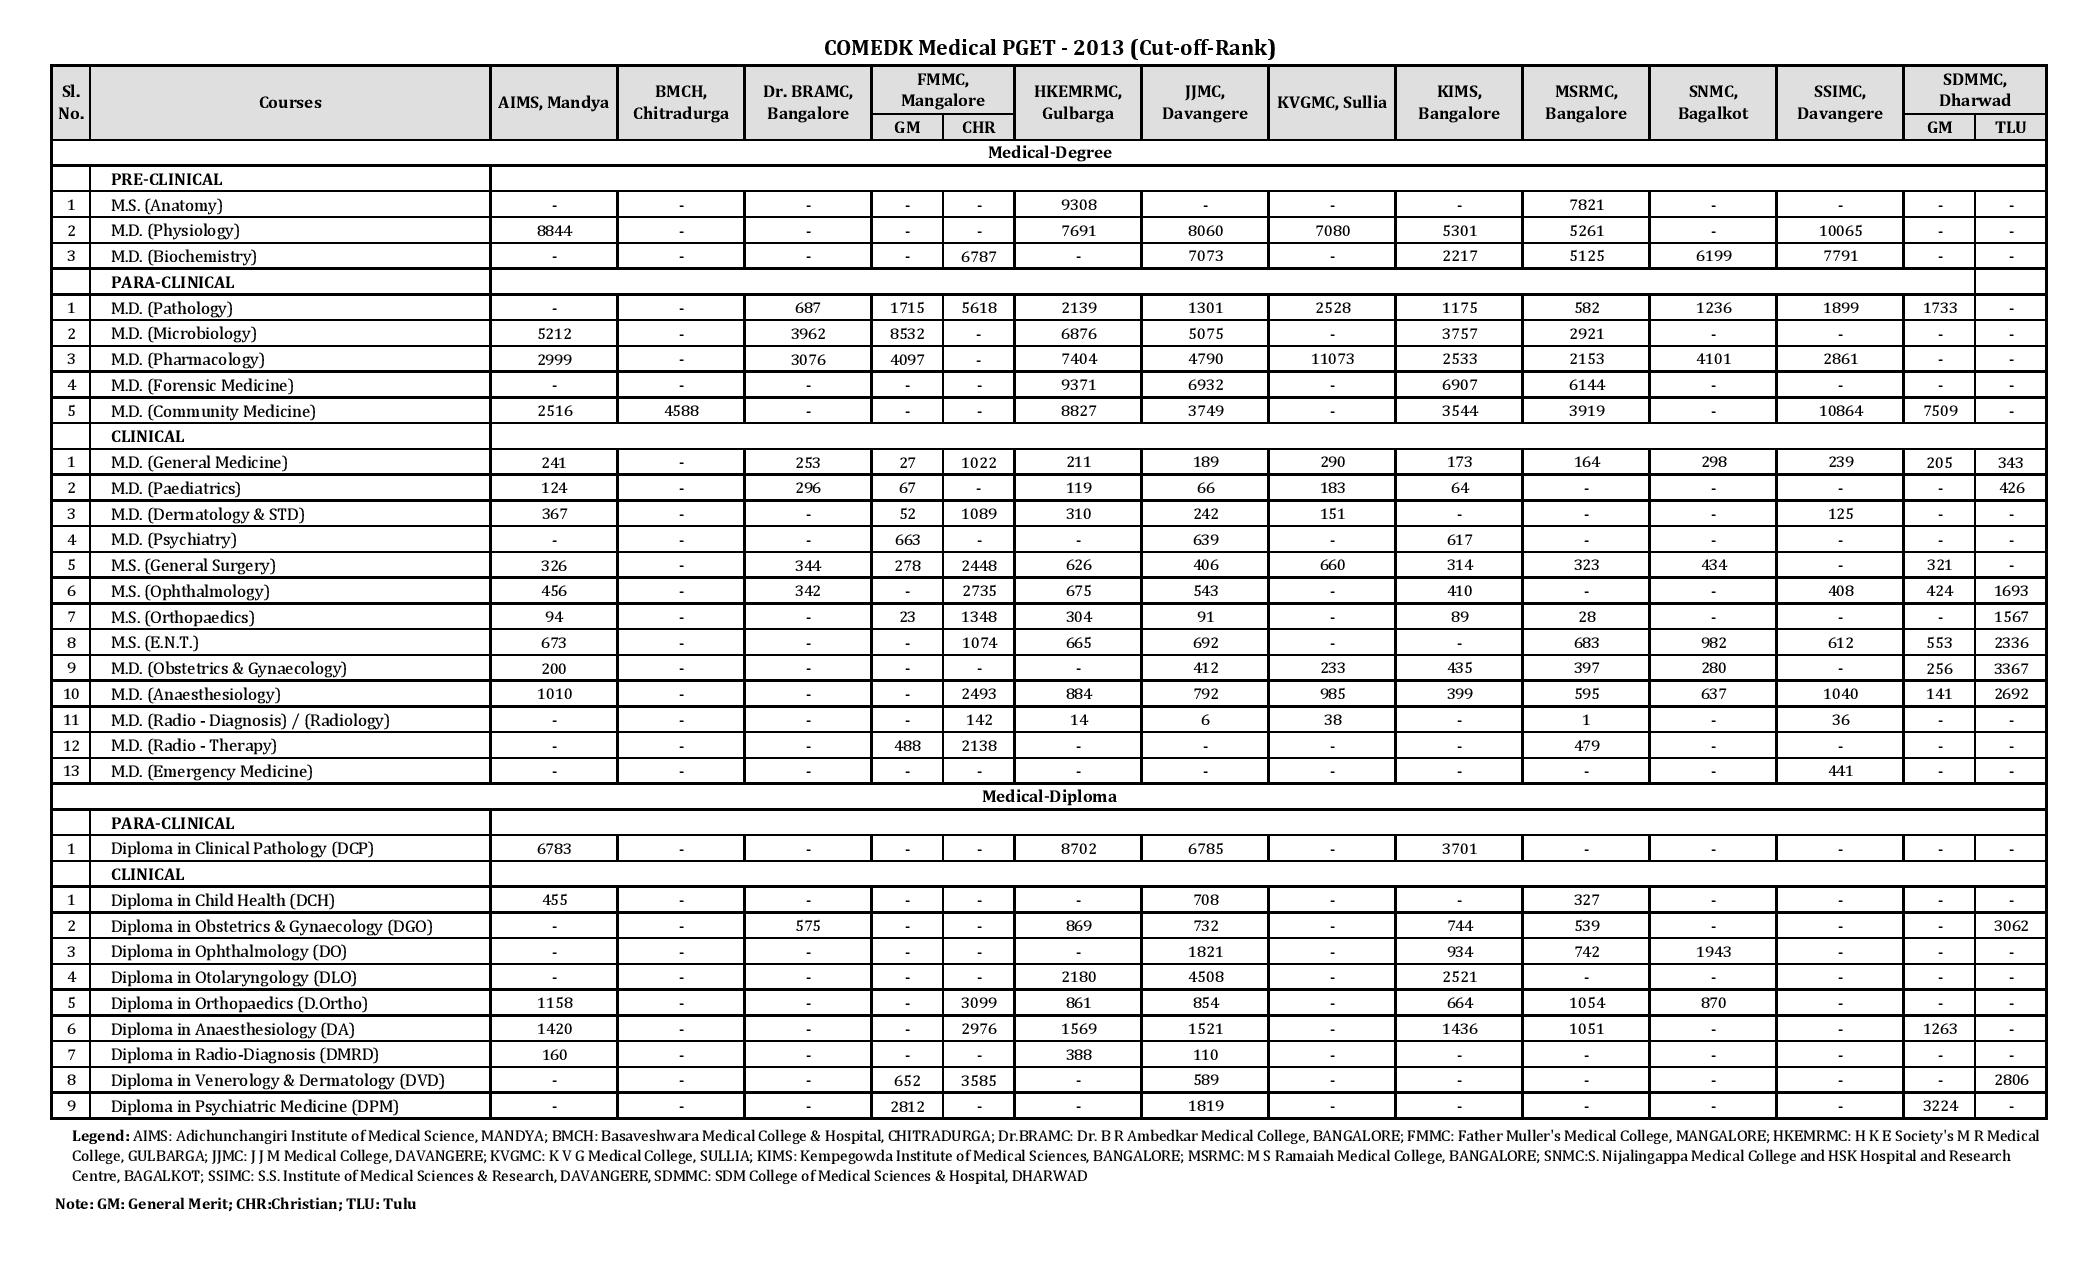 comdek 2013 Medical cutoff rank-page-001